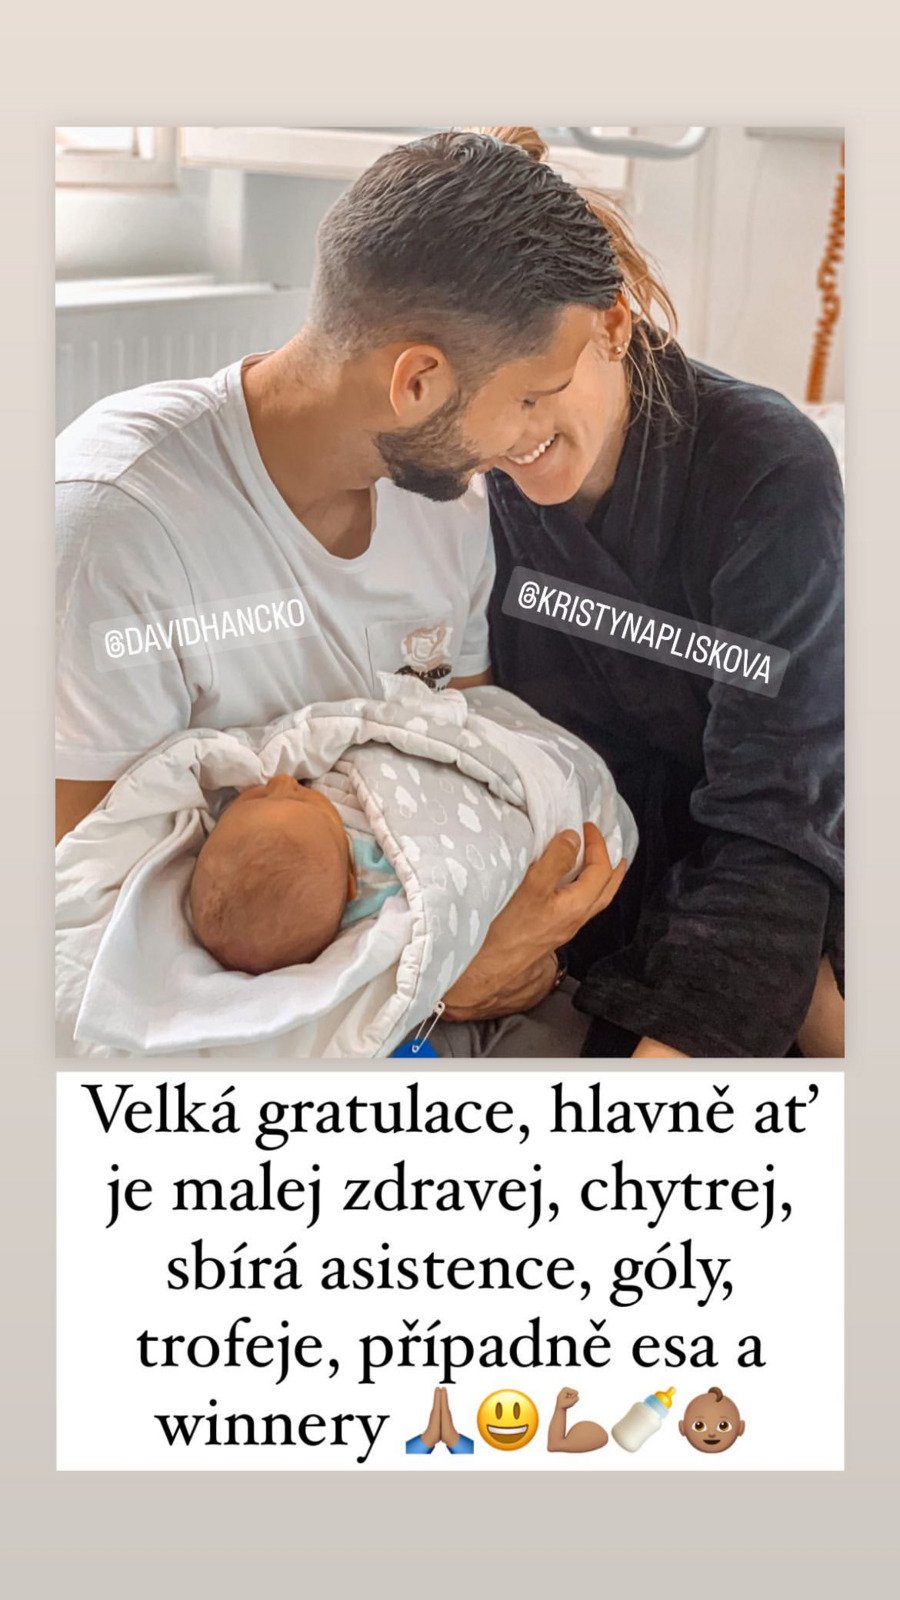 Michal Hrdlička a jeho gratulace novopečeným rodičům.